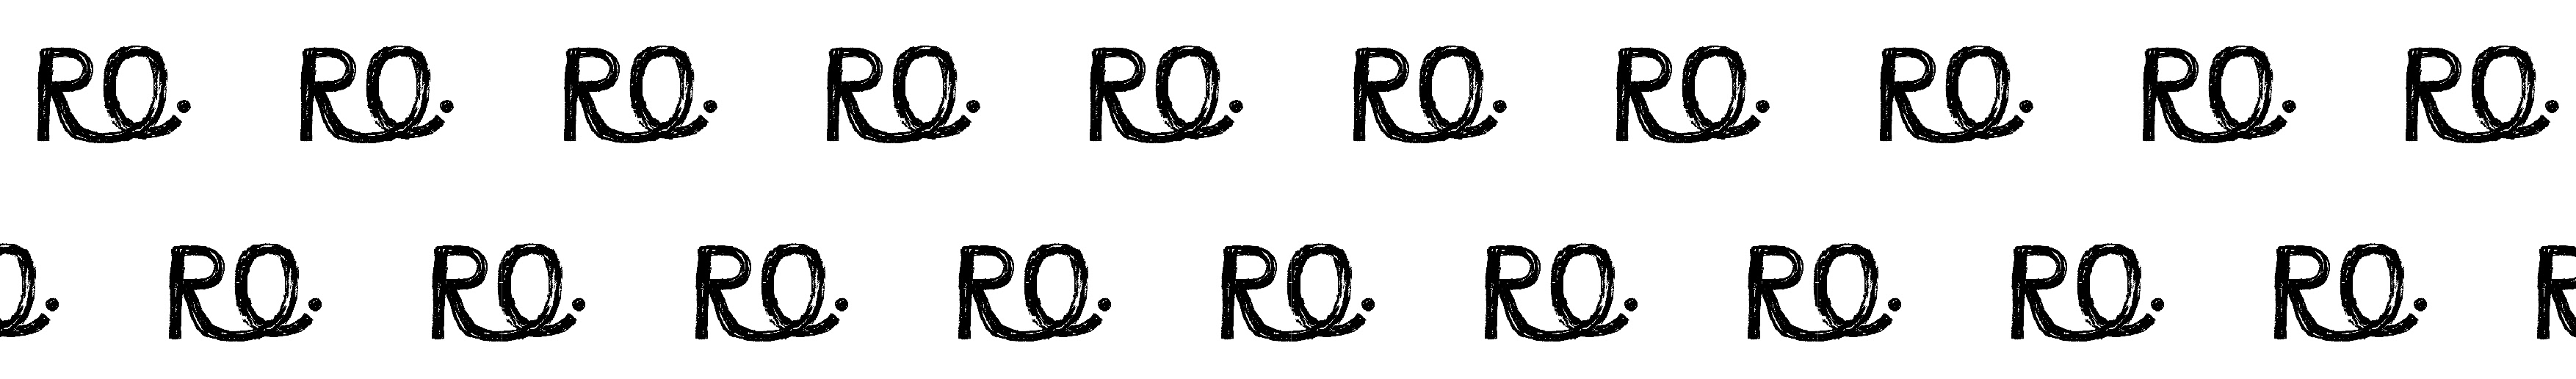 RO Designs 的個人檔案橫幅